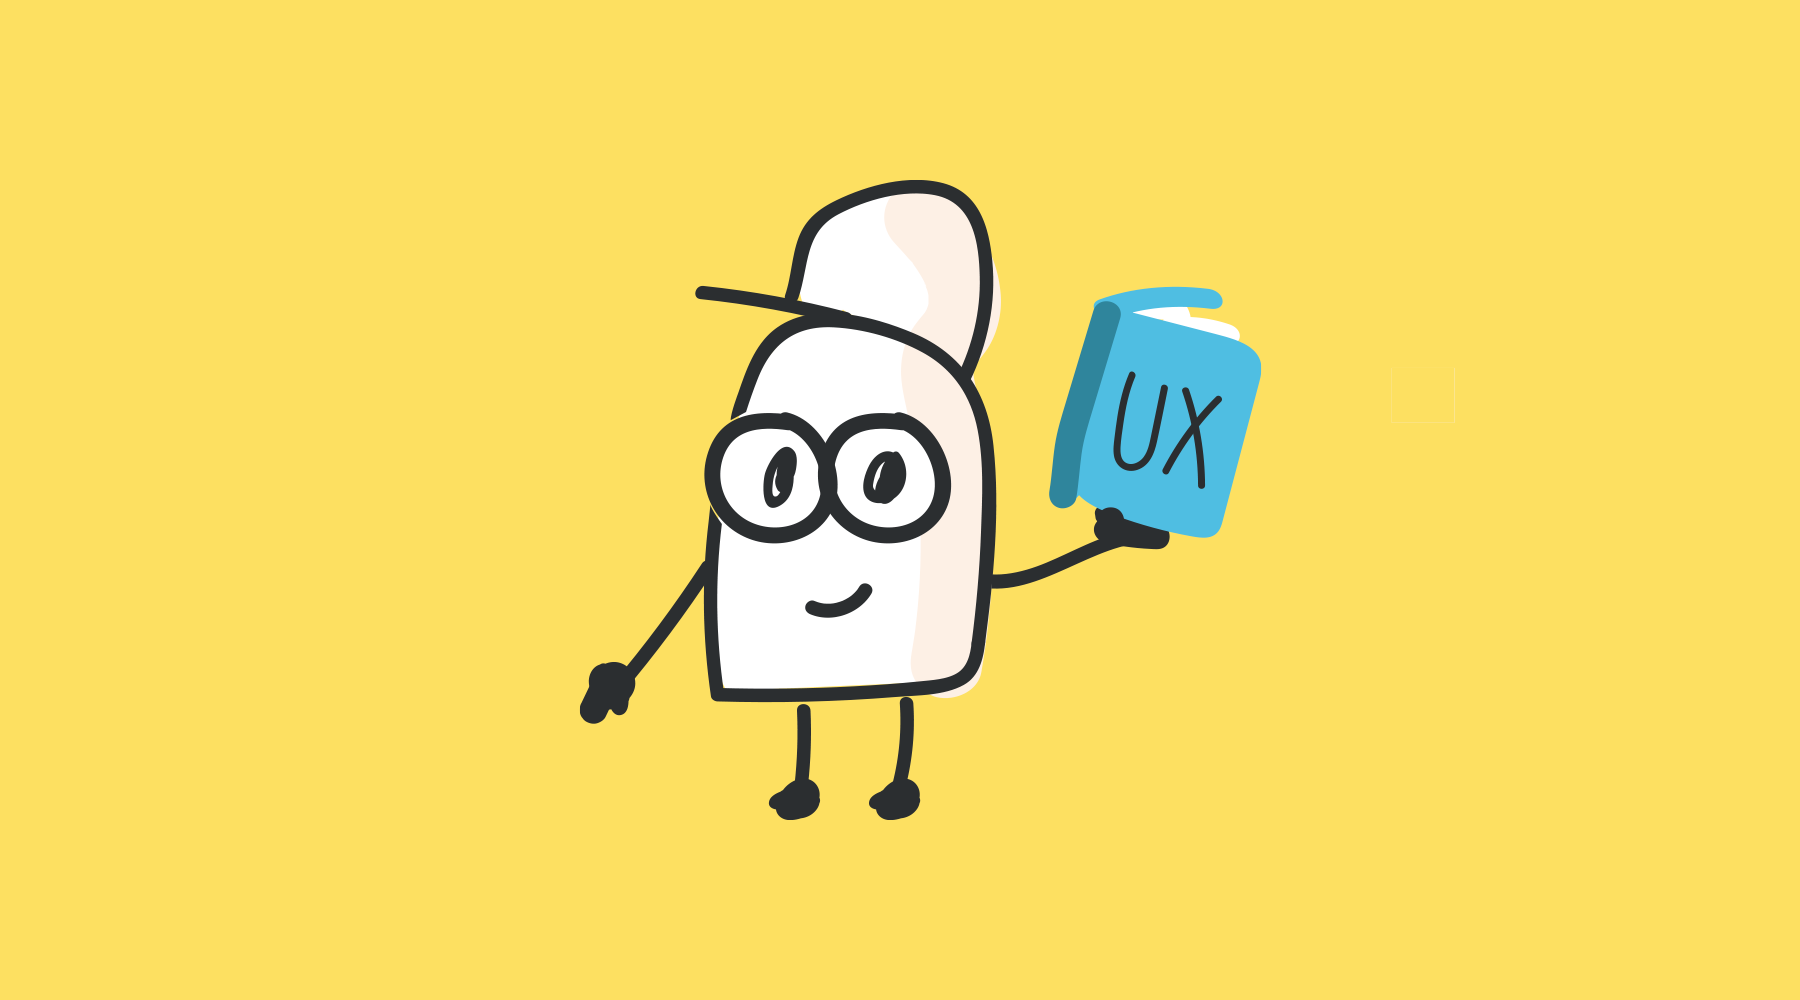 ux design feedback